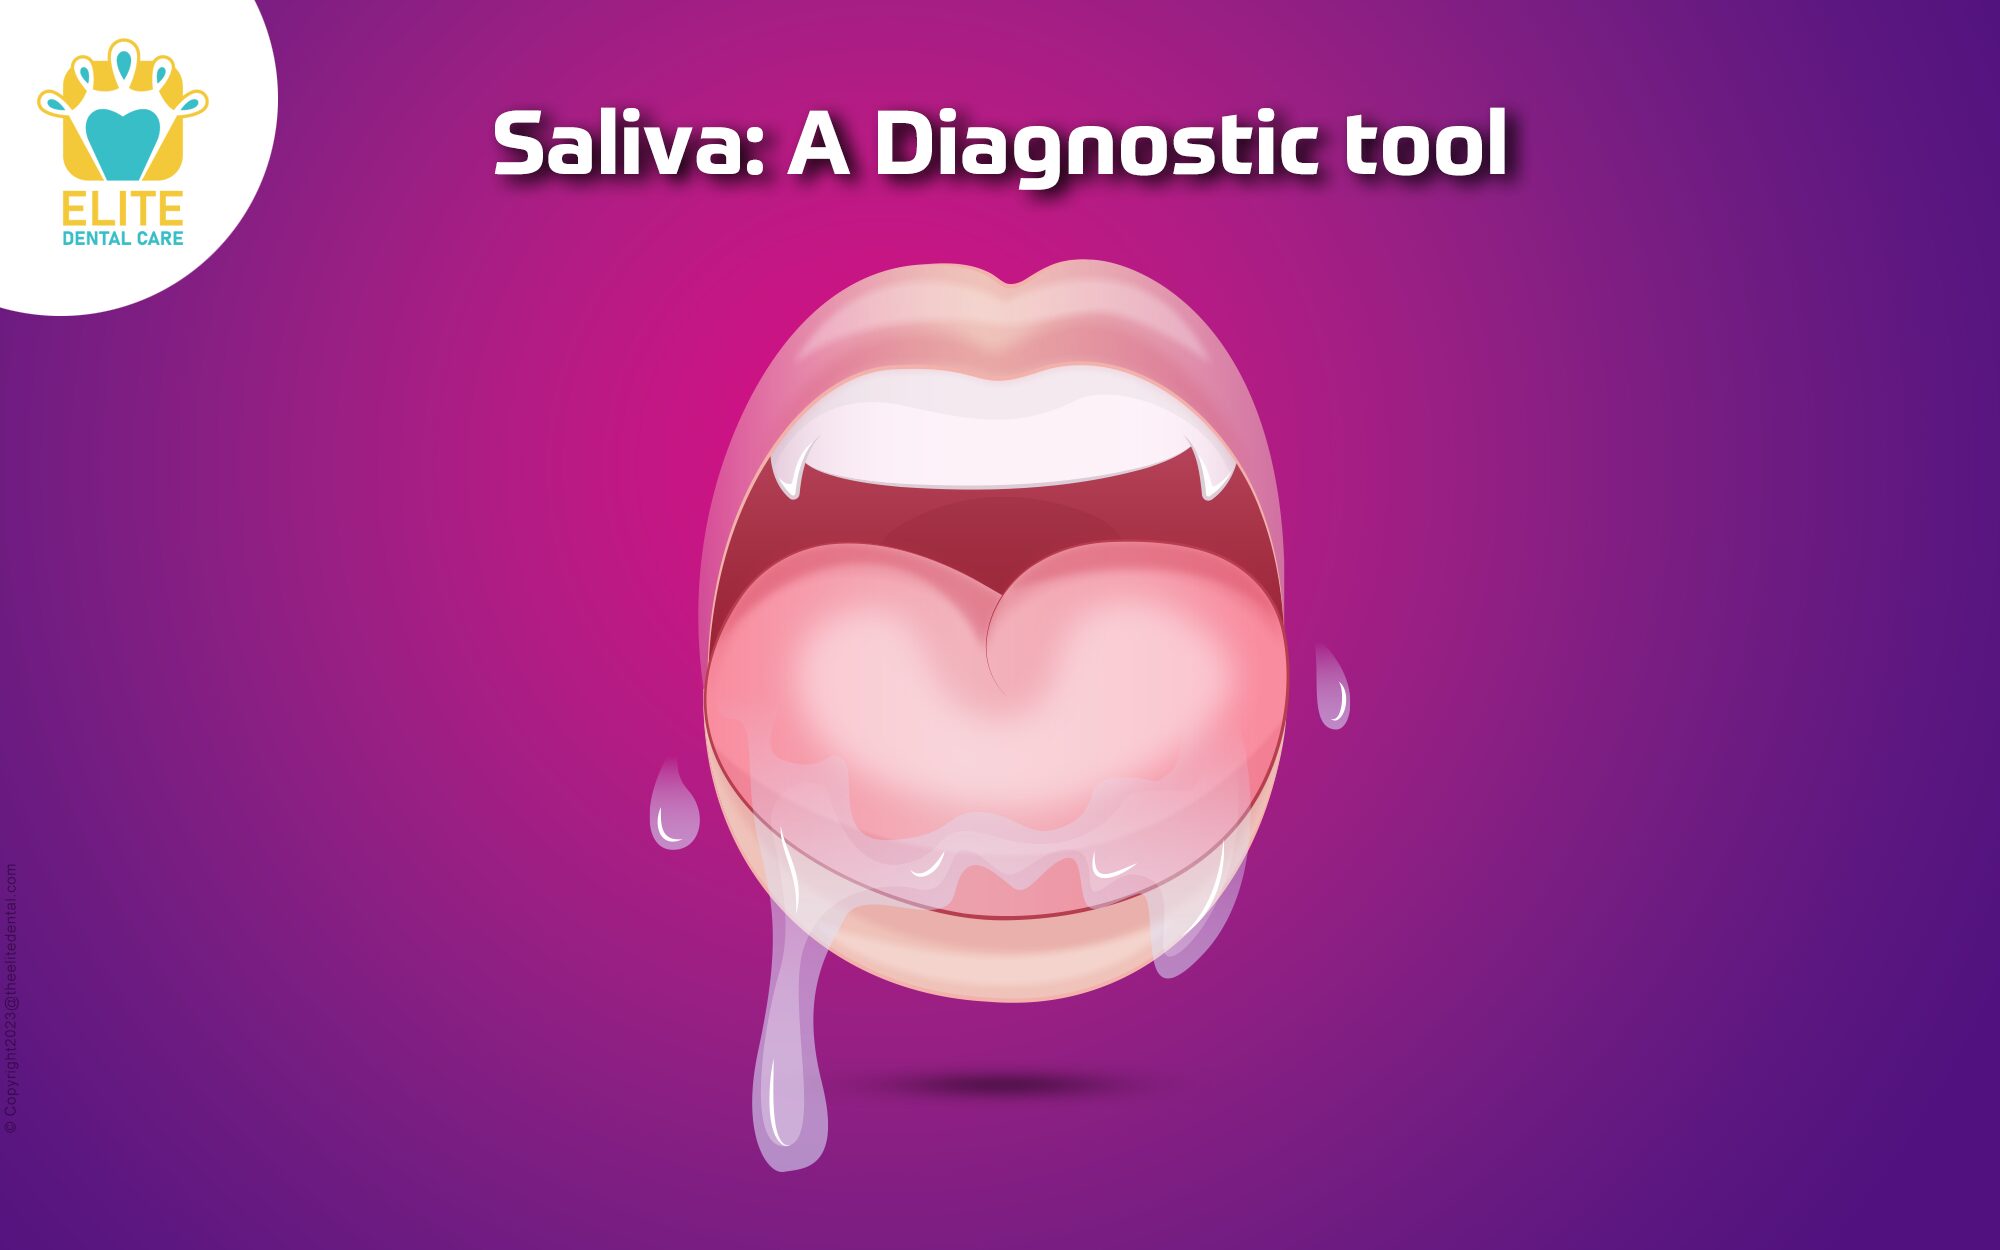 SALIVA: A DIAGNOSTIC TOOL